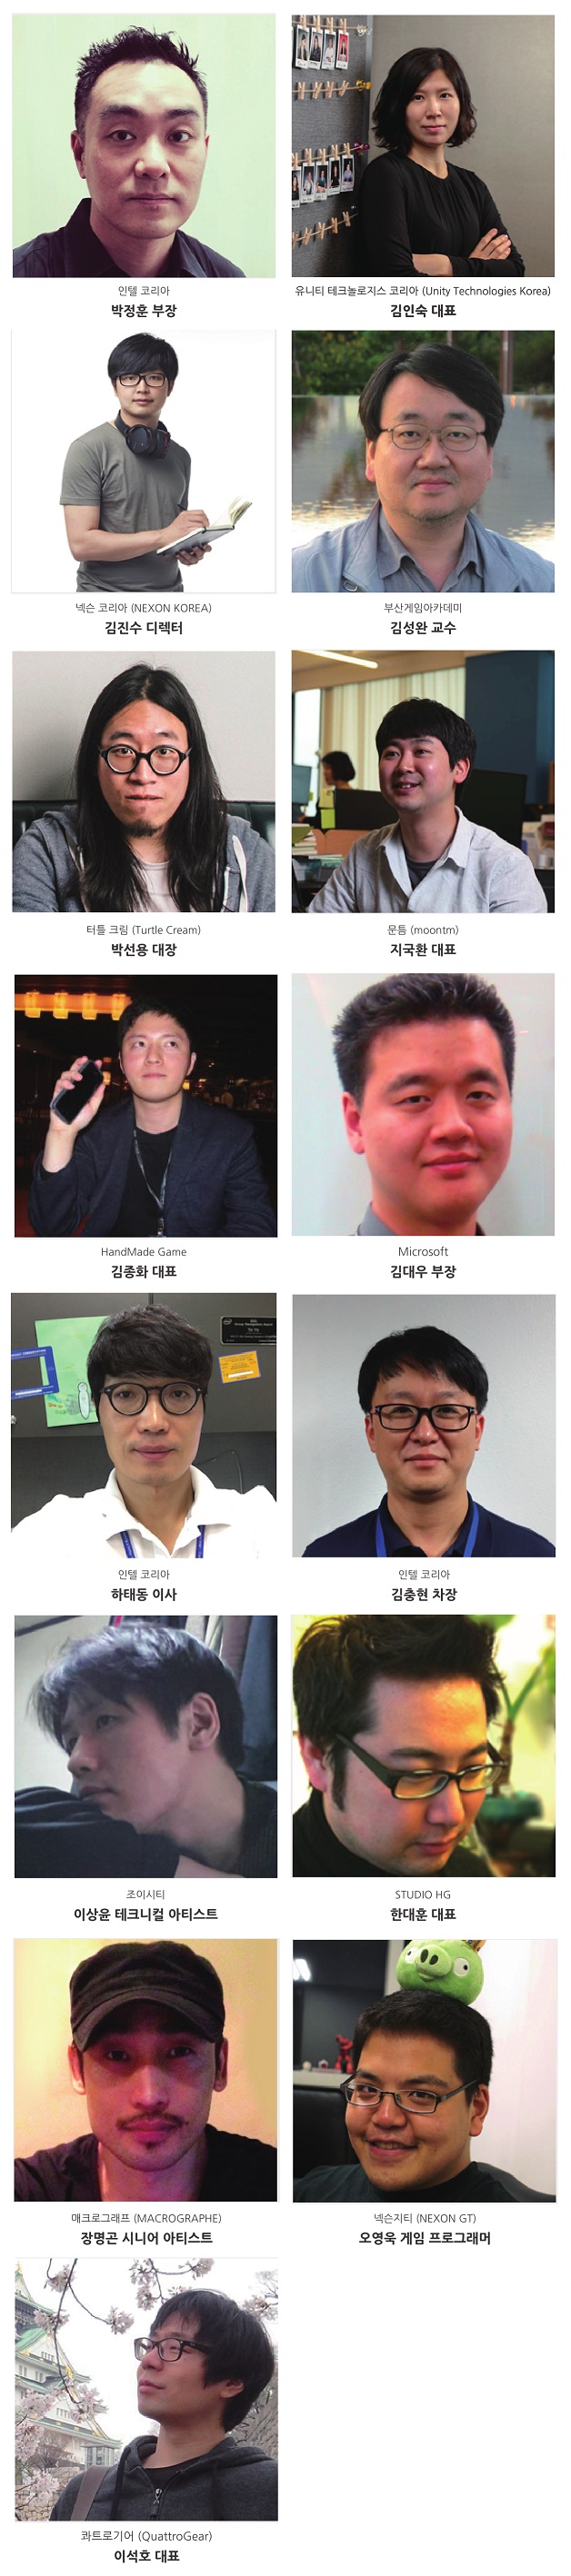 Intel_Buzz_WS_Seoul_2016_-_Speakers.jpg